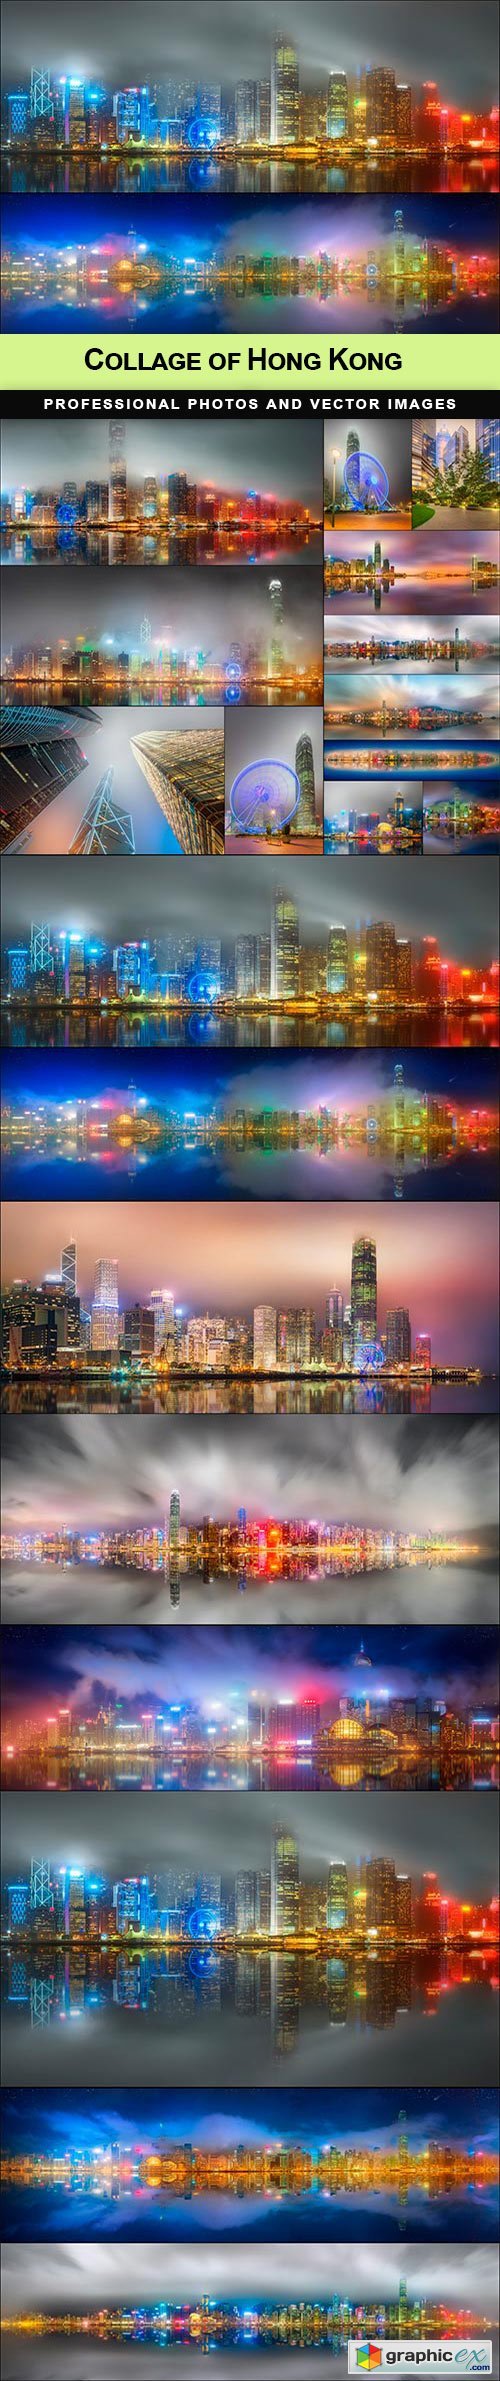 Collage of Hong Kong - 10 UHQ JPEG